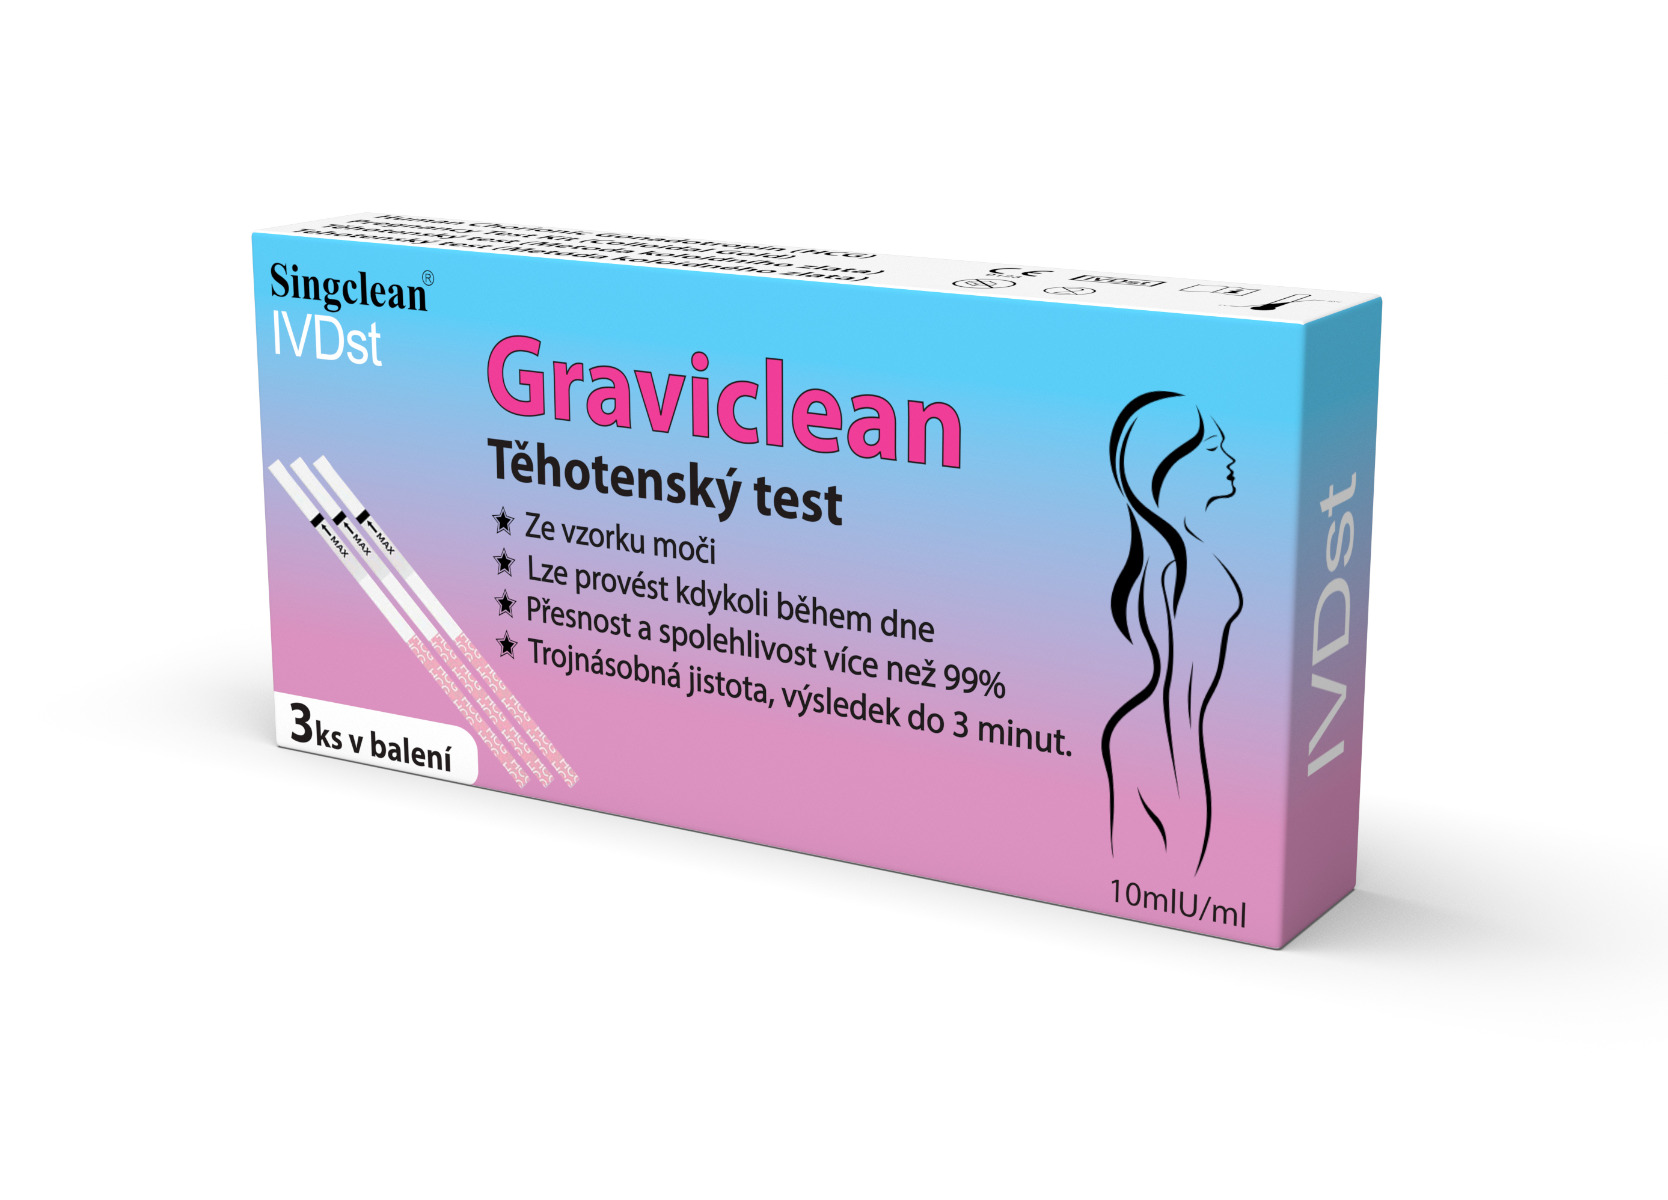 Singclean Graviclean HCG 10mlU/ml těhotenský test 3 ks Singclean